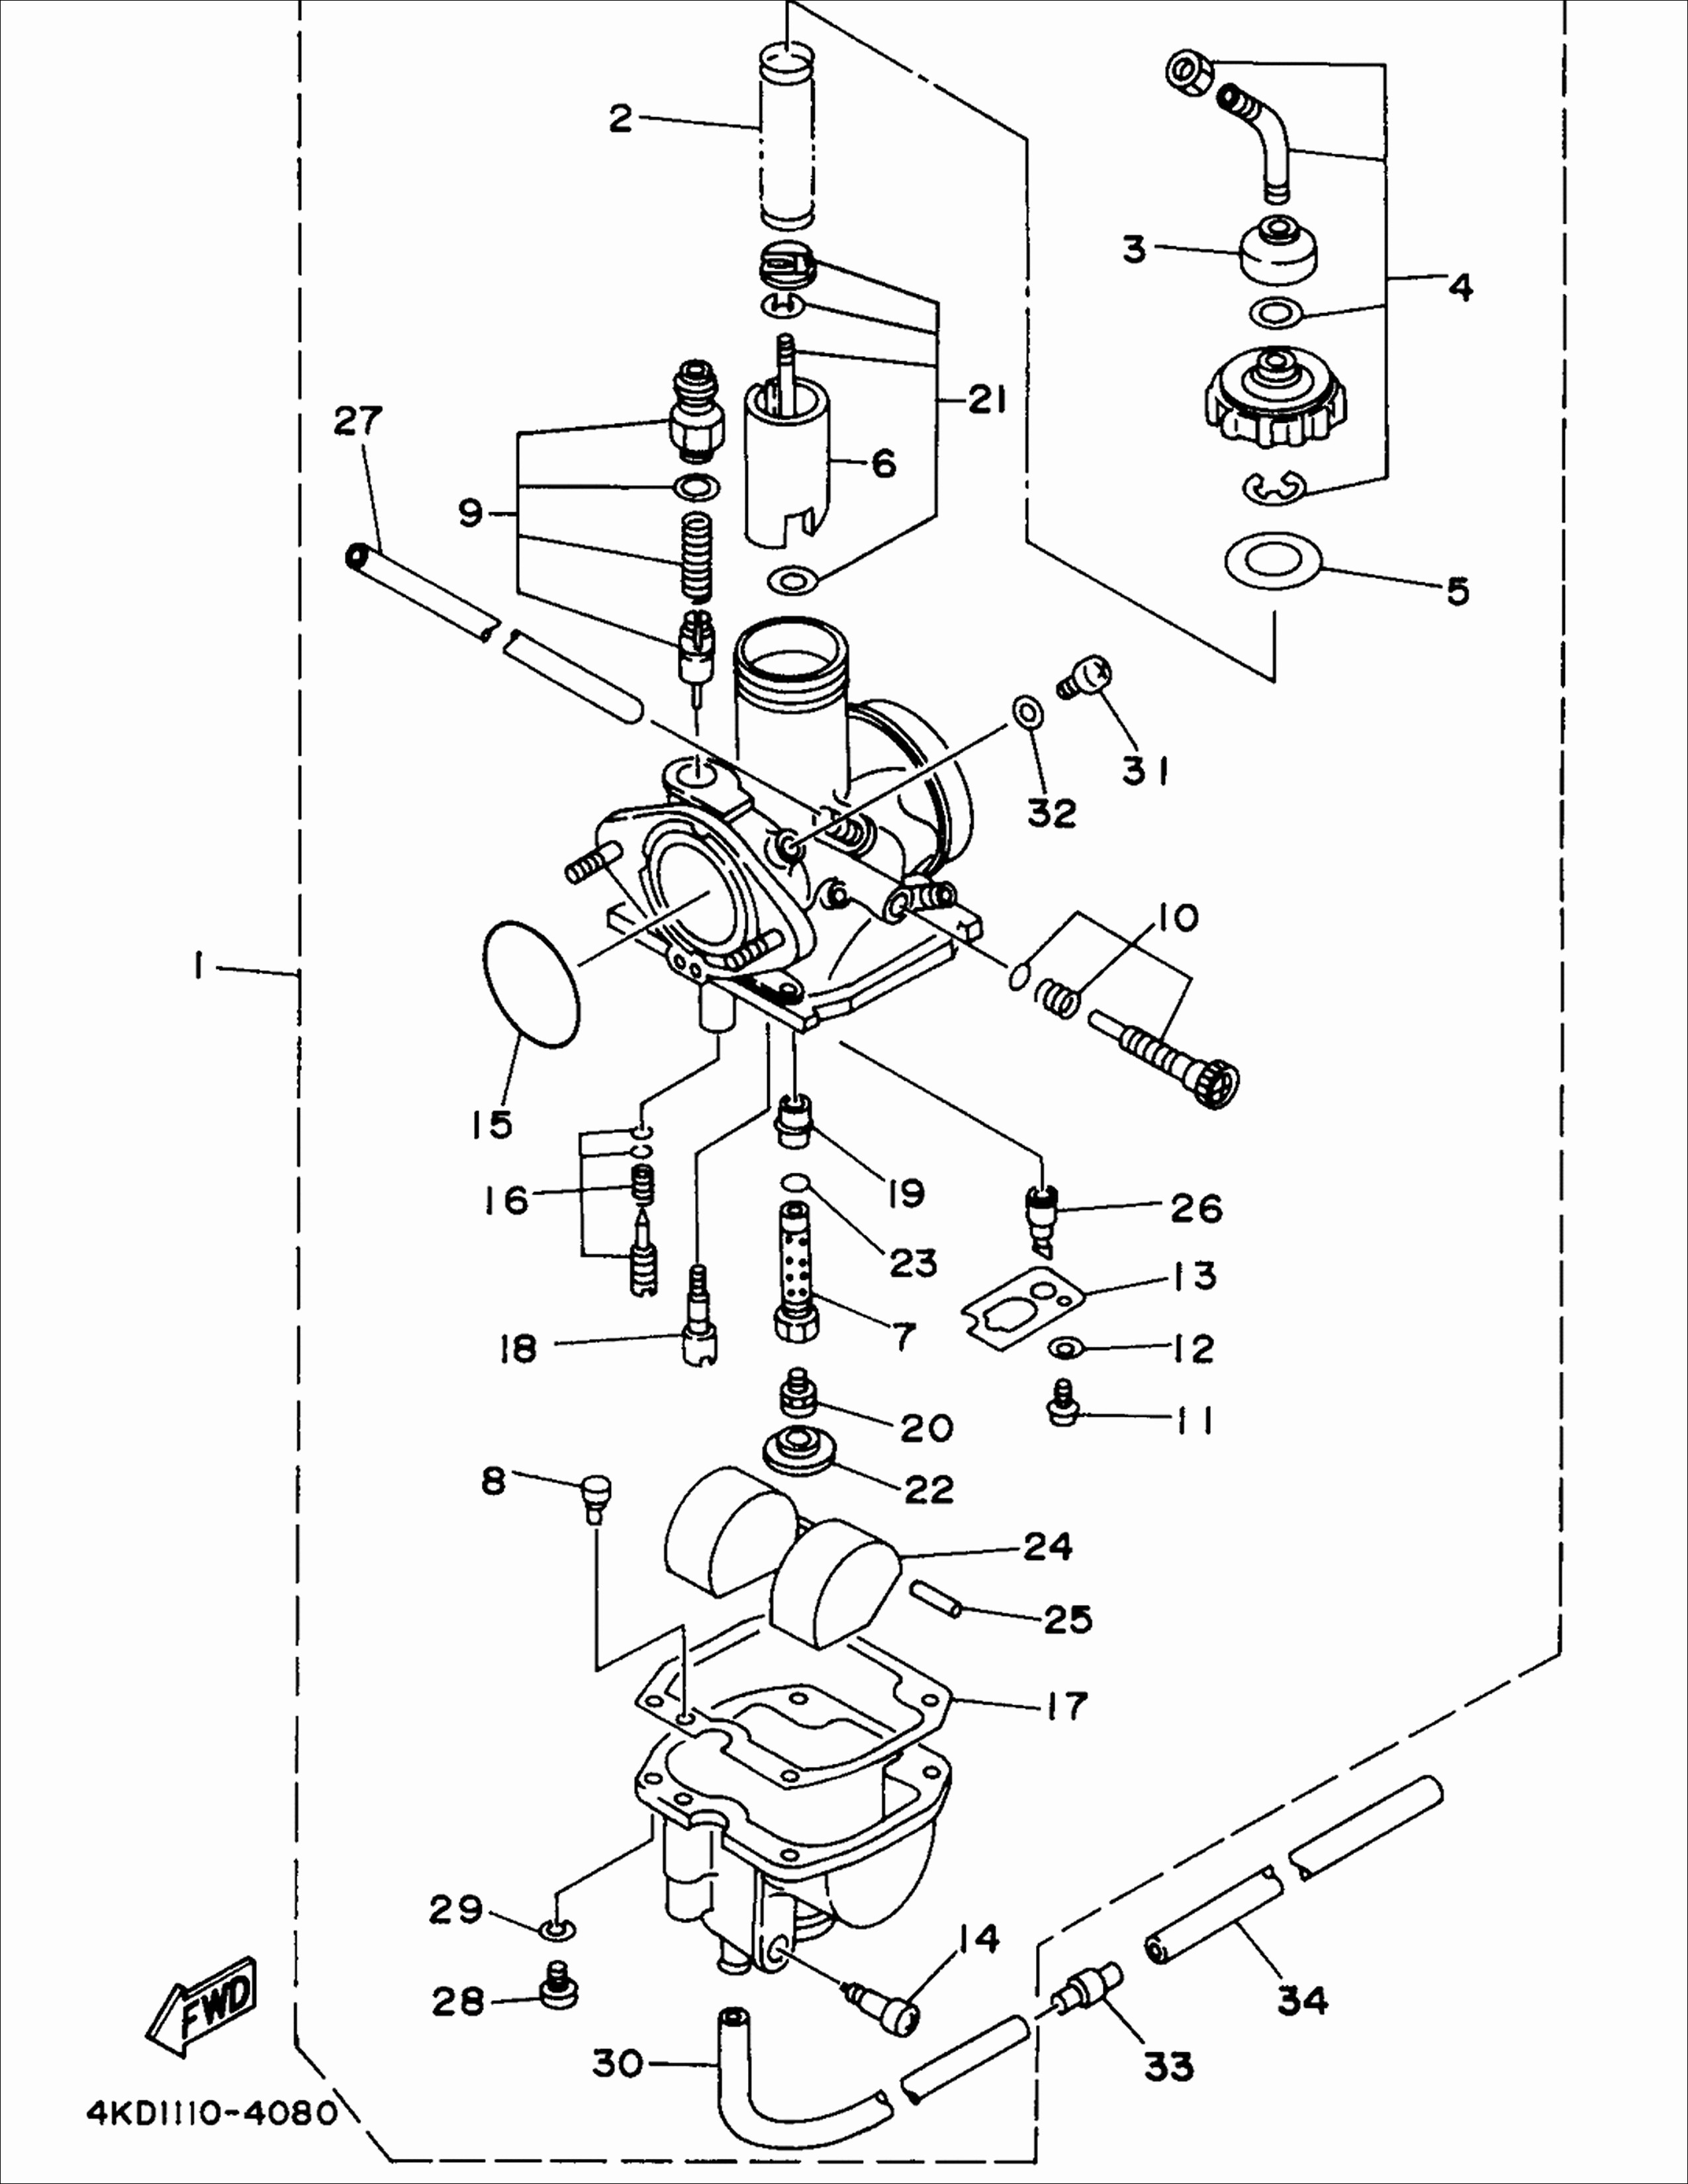 Yamaha Banshee Engine Diagram Yamaha Xj 400 Wiring Yamaha Wiring Diagrams Instructions